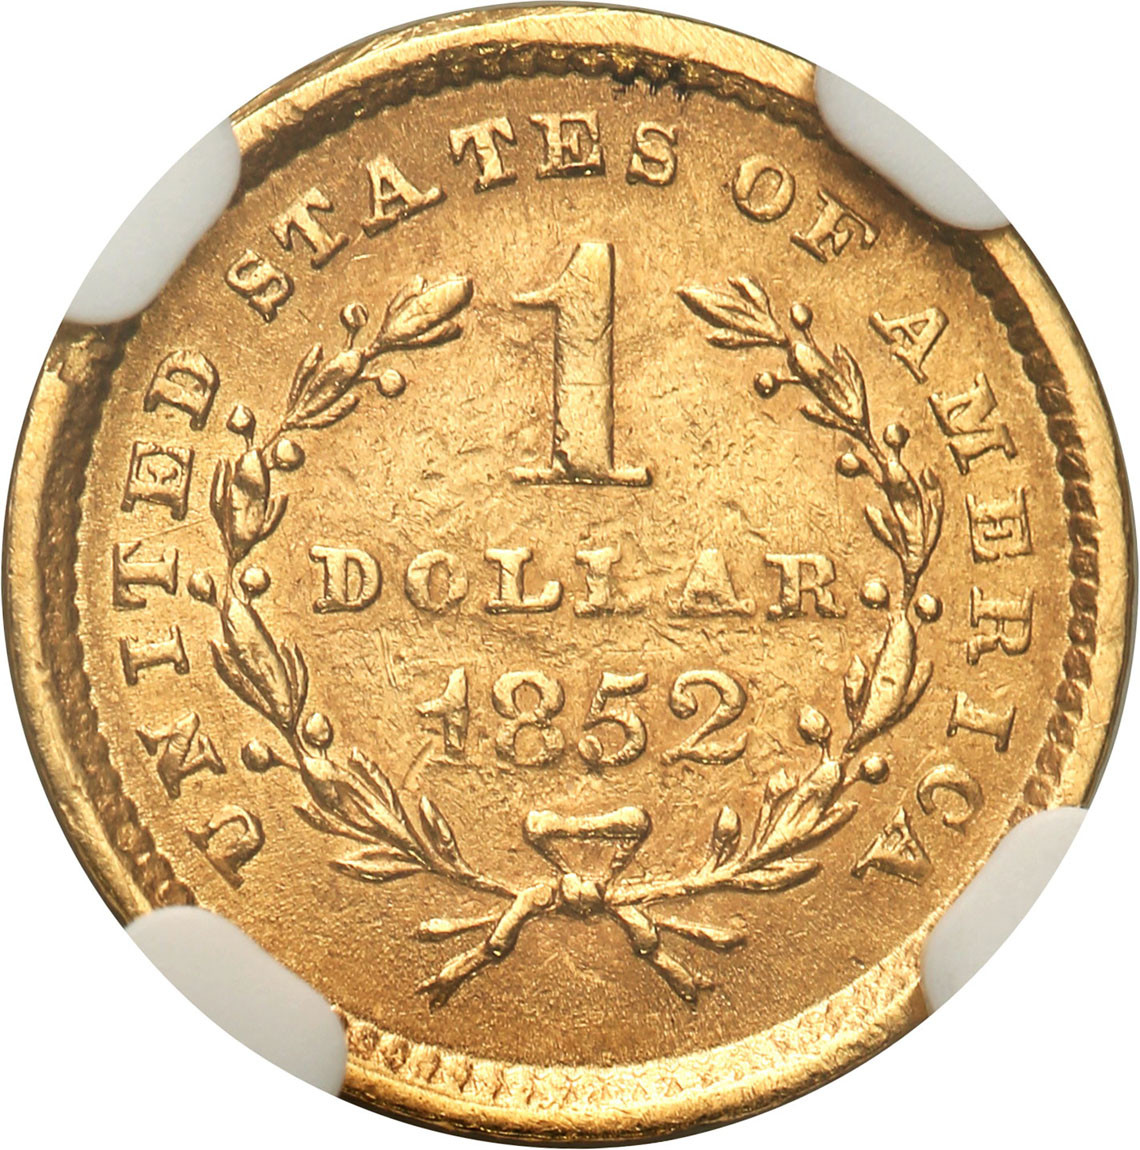 USA. 1 dolar 1852 typ I, Philadelphia NGC AU55